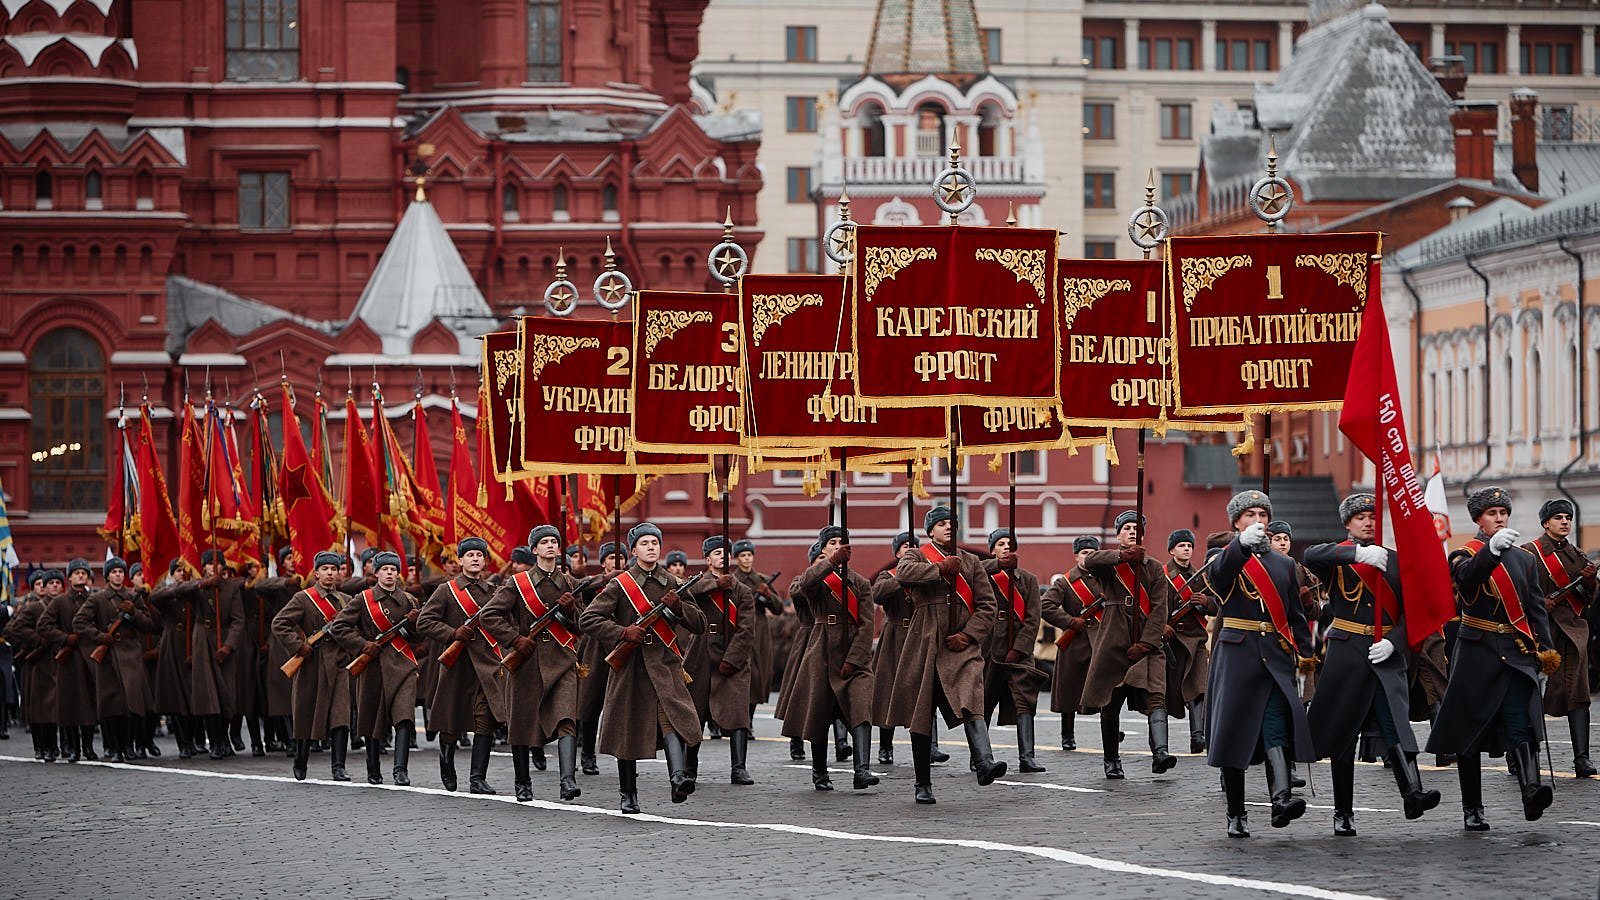 1 июля фронт. 24 Июня парад Победы в Москве 1945. Парад Победы на красной площади 1945. Парад 24 июня 1945 года в Москве на красной площади. Знамя Победы на параде Победы 1945 года.